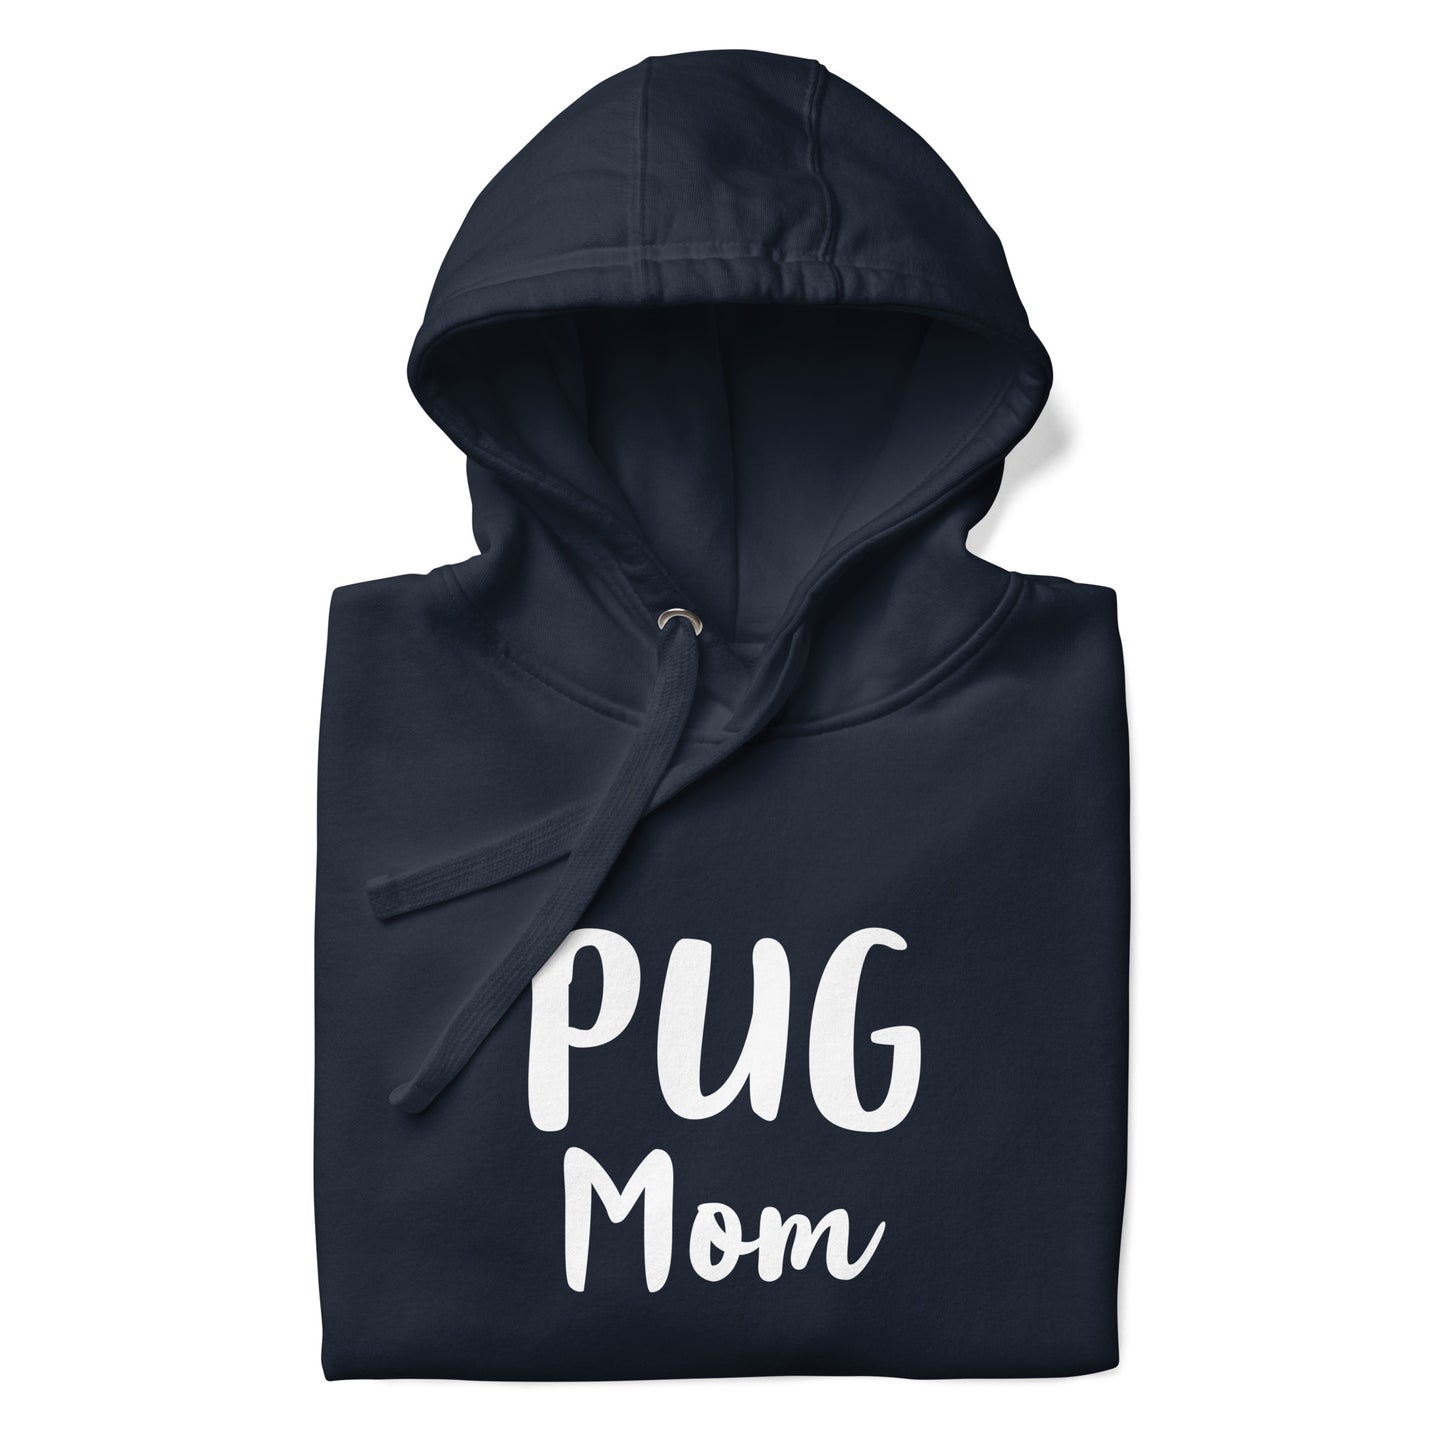 Pug Mom - Hoodie